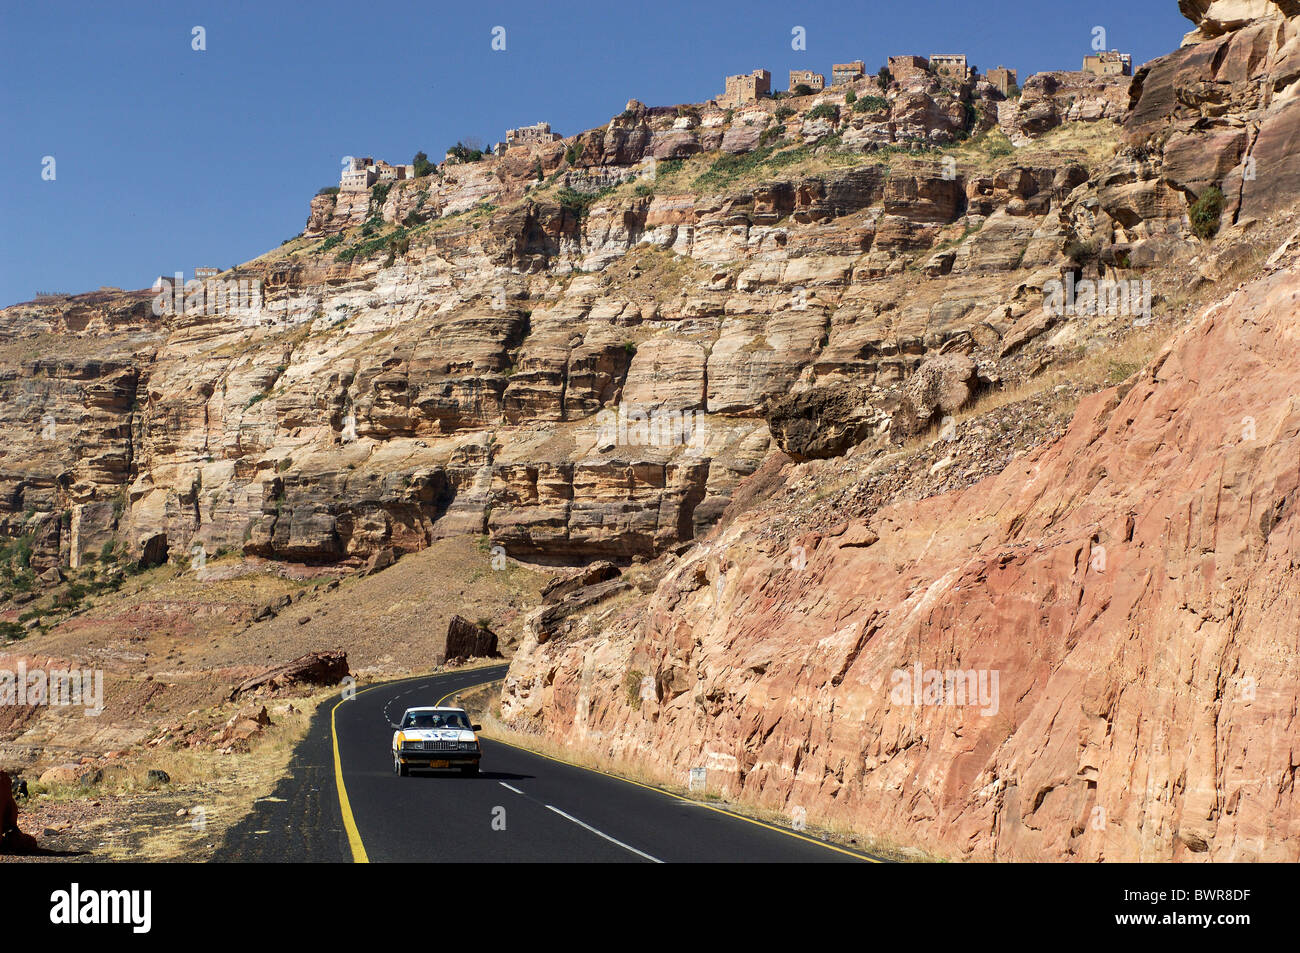 Jemen-Straße nach Wadi Al-Naam Haraz Bergen Nord-Jemen Arabische Halbinsel Nahost Osten Orient oriental Stockfoto